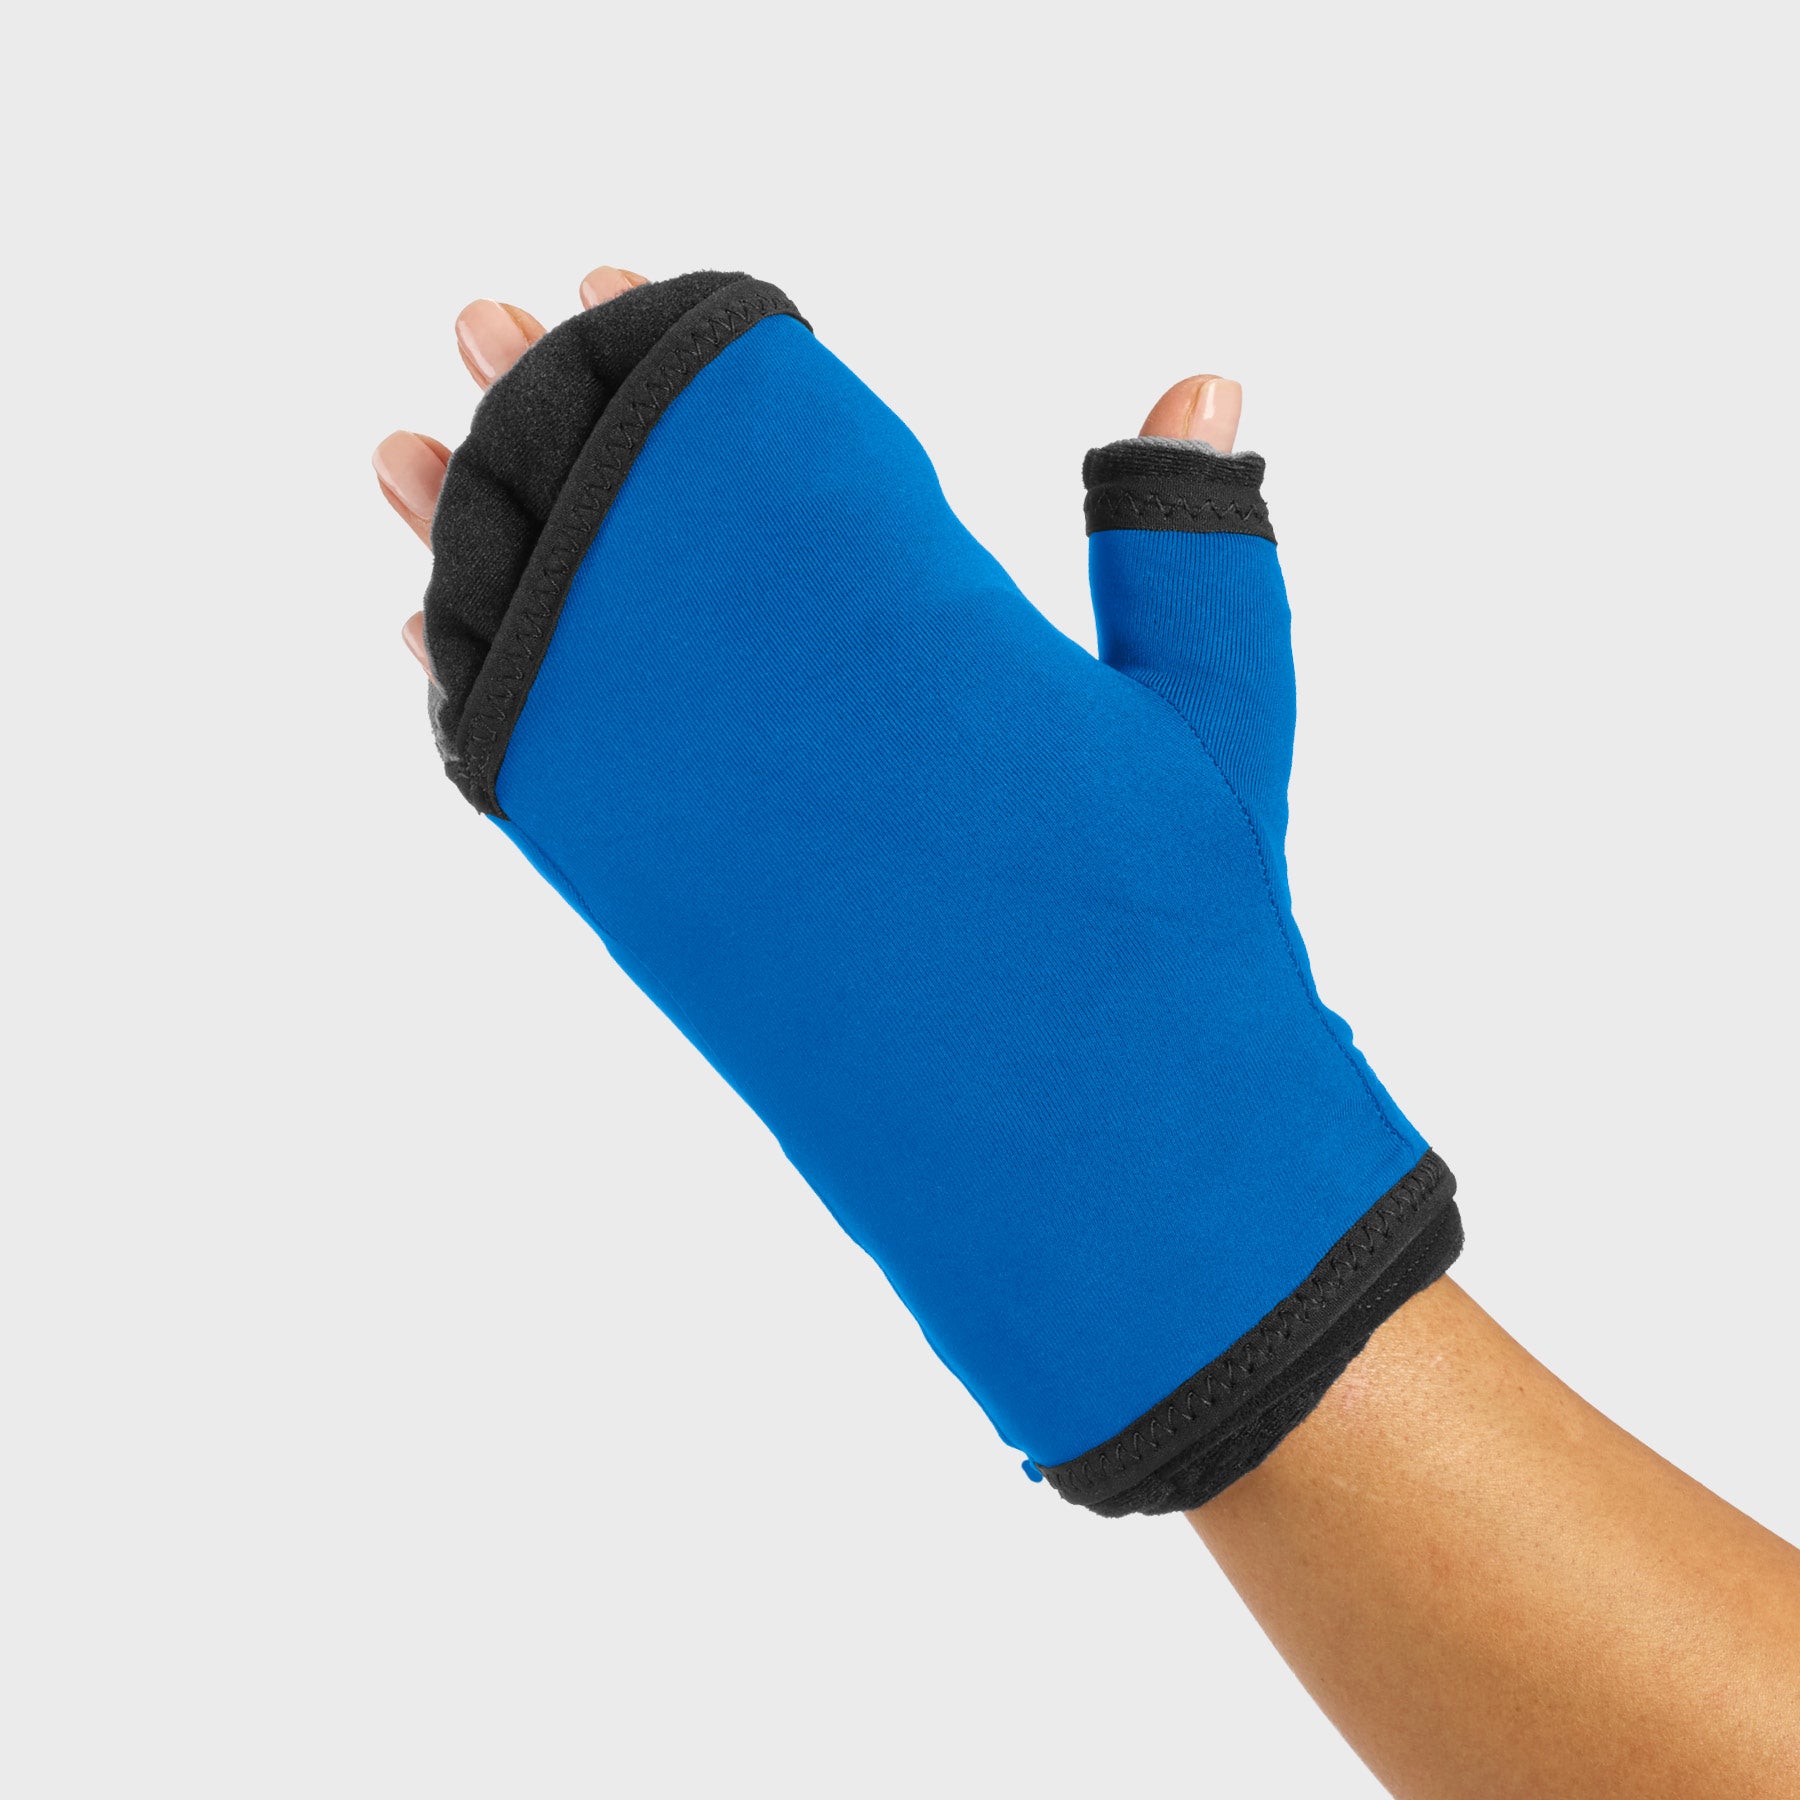 Solaris TributeWrap Sleep Sleeve Glove